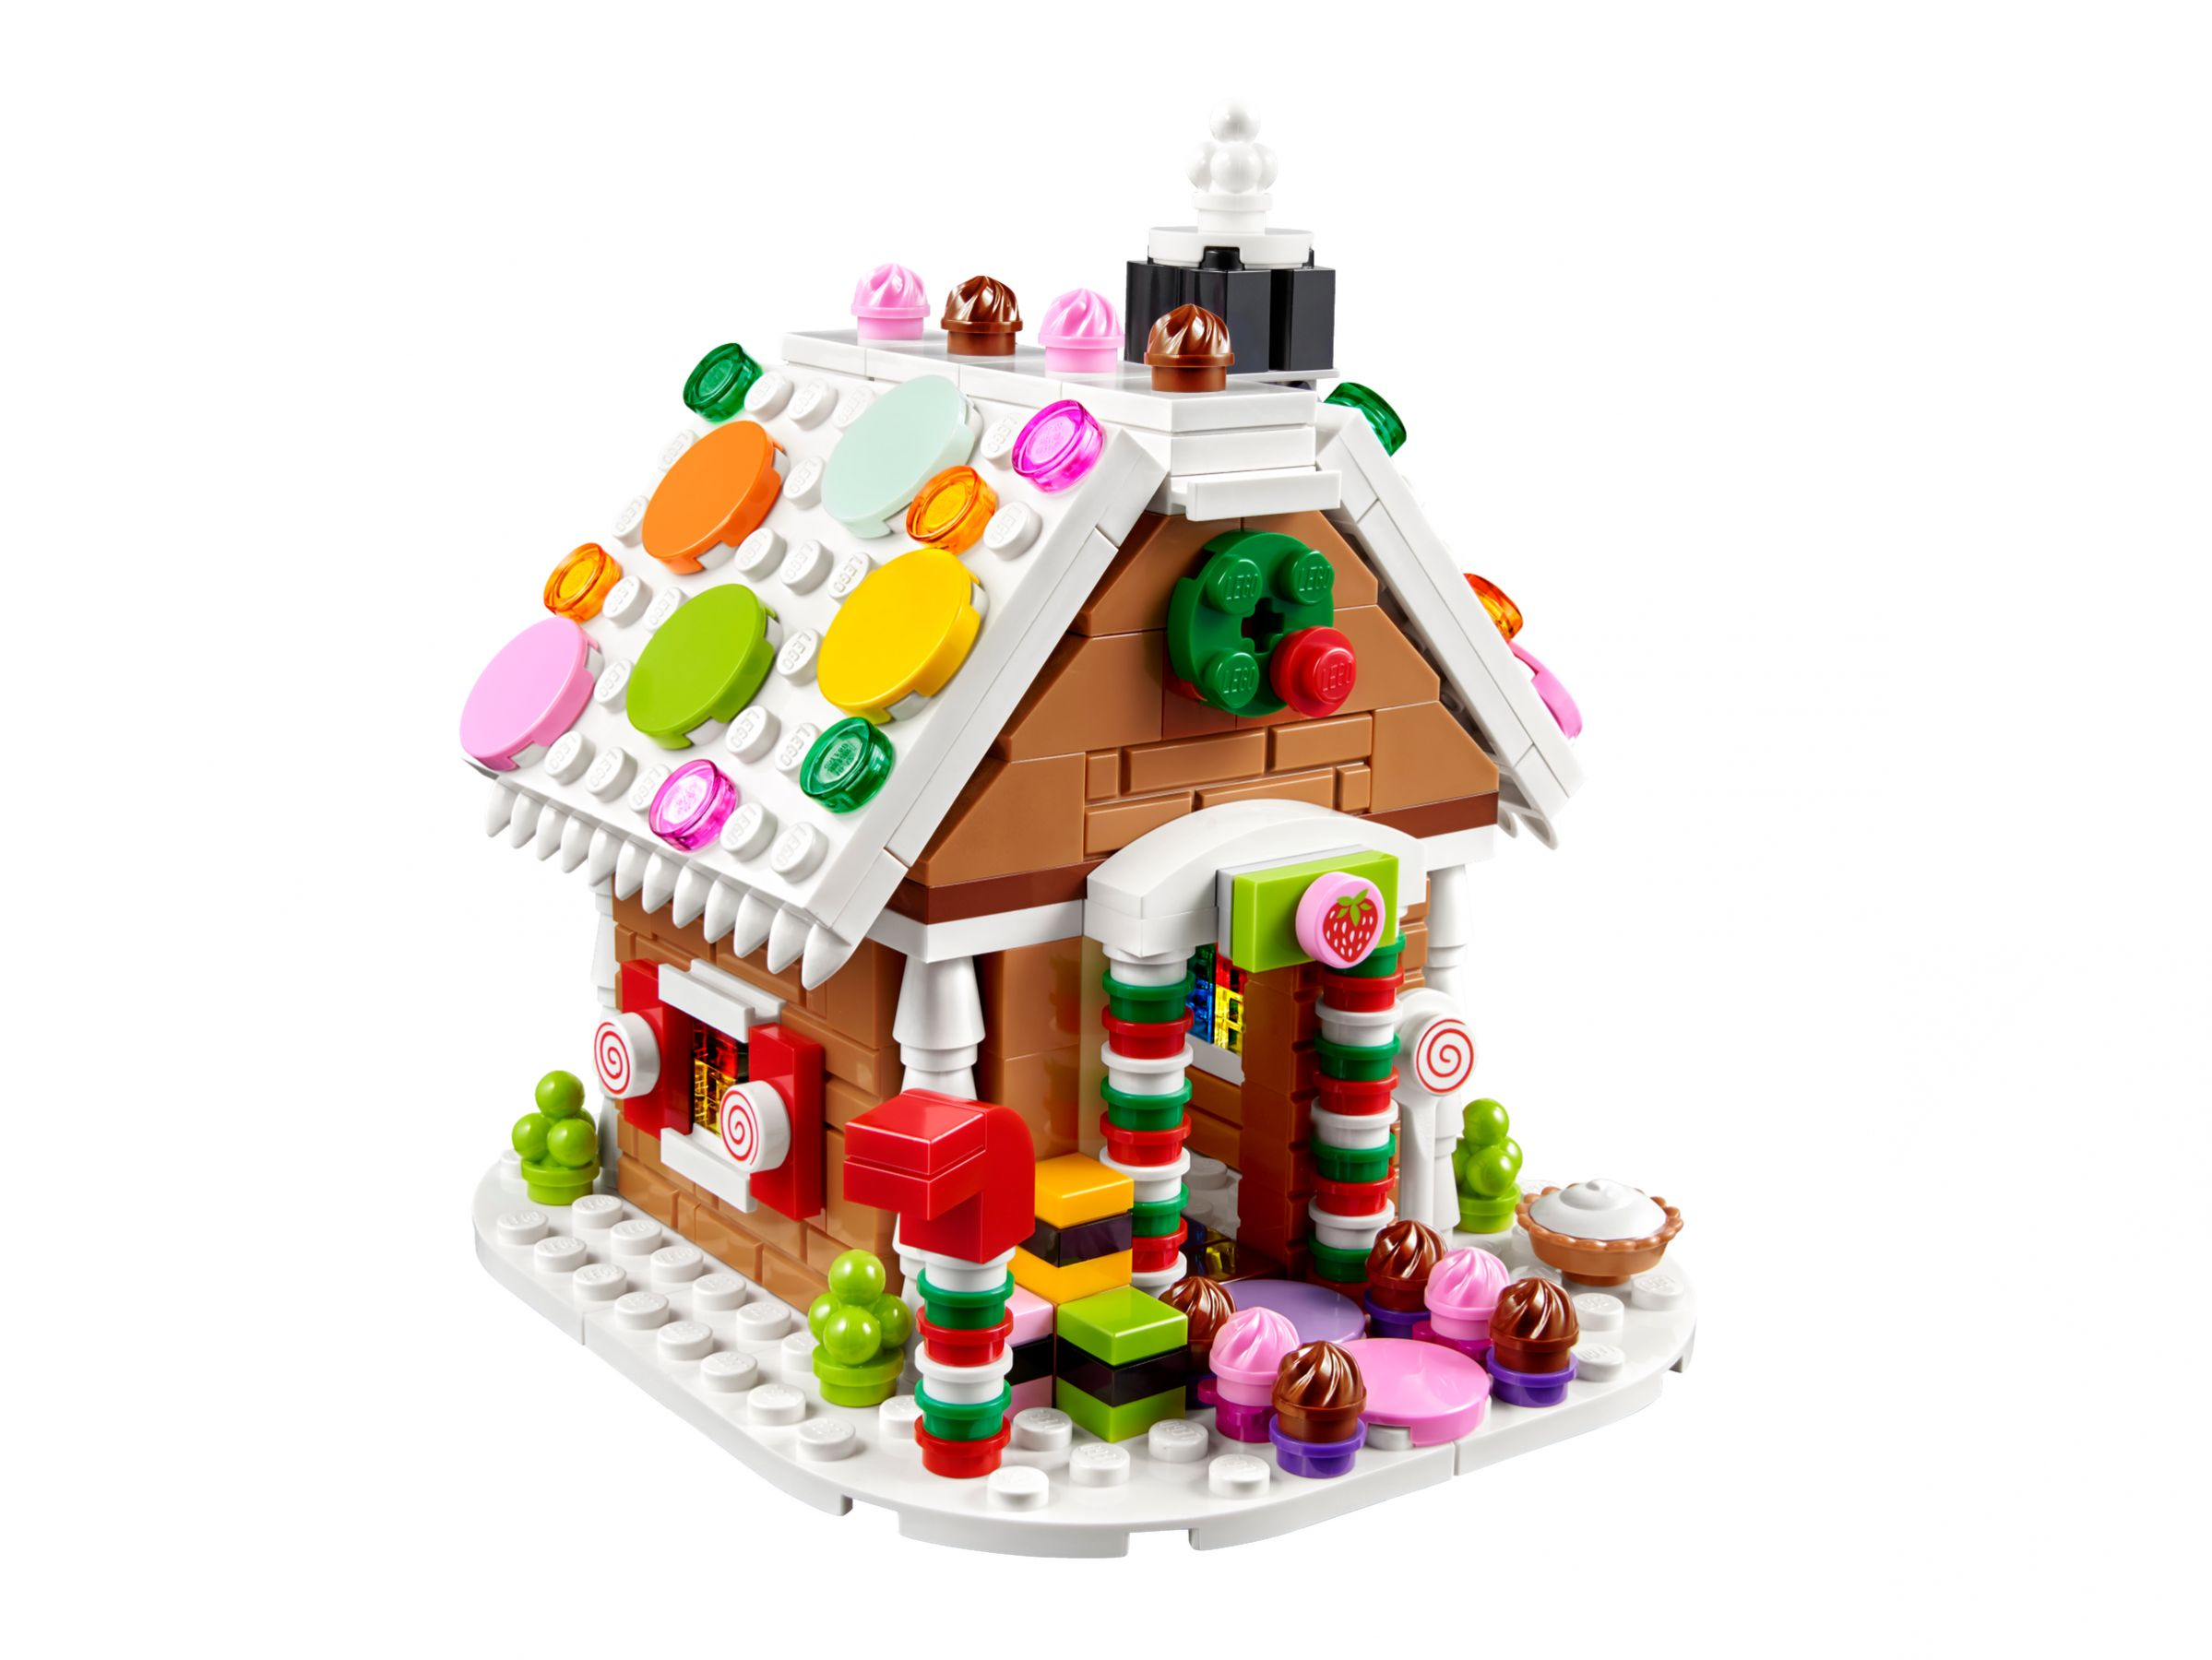 40139 Bausatz LEGO Lebkuchenhaus